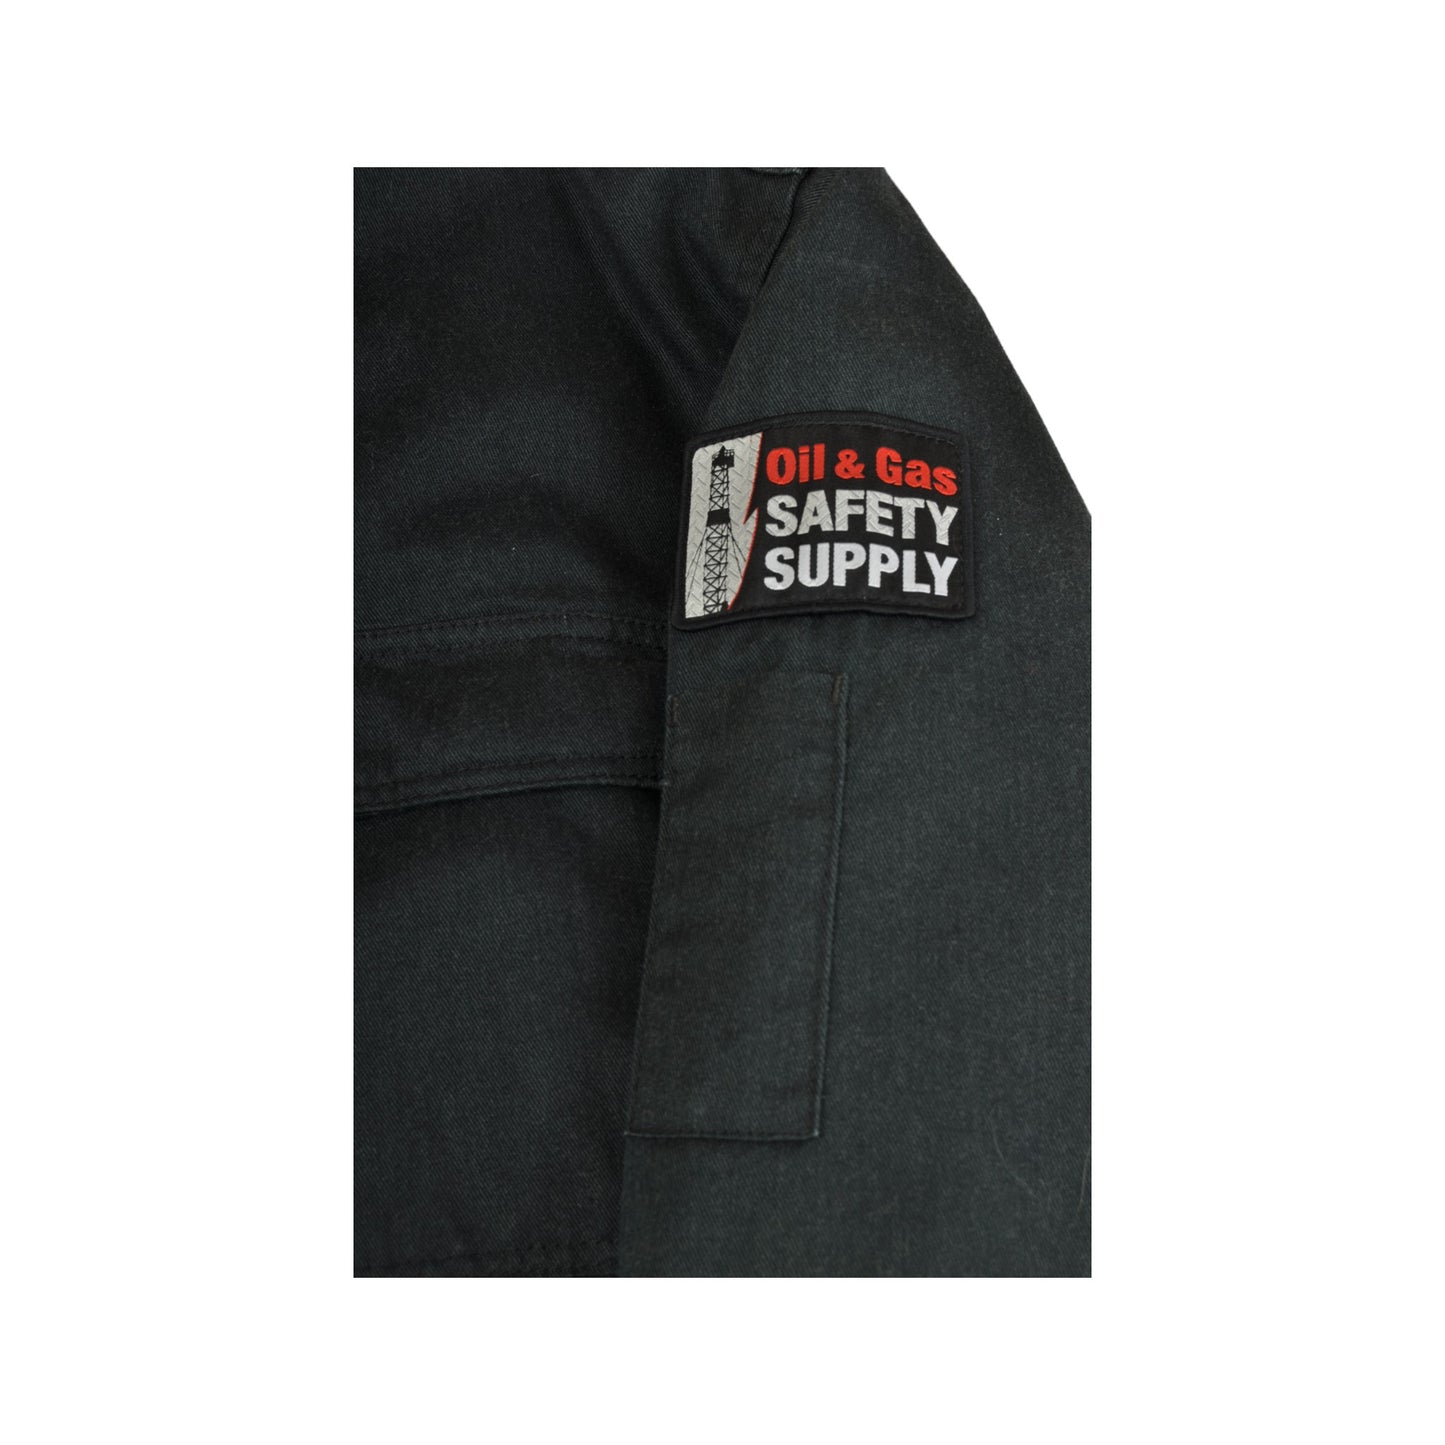 Vintage Workwear Fire Resistant Jacket Grey Medium